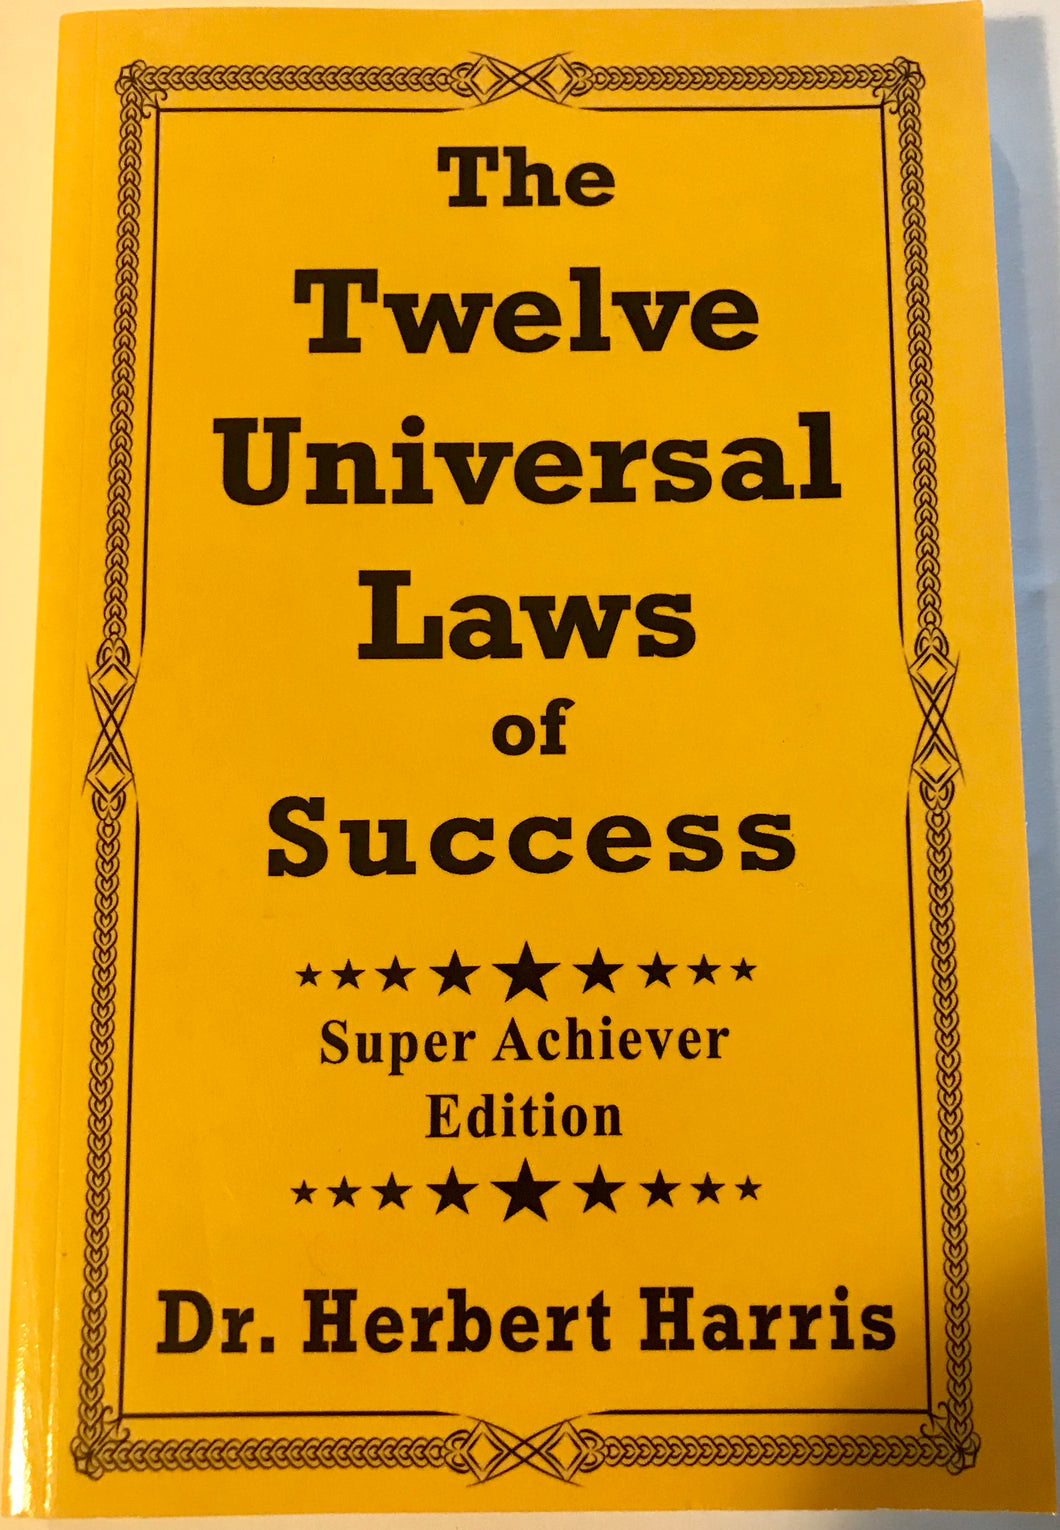 The Twelve Universal Laws of Success by Dr. Herbert Harris